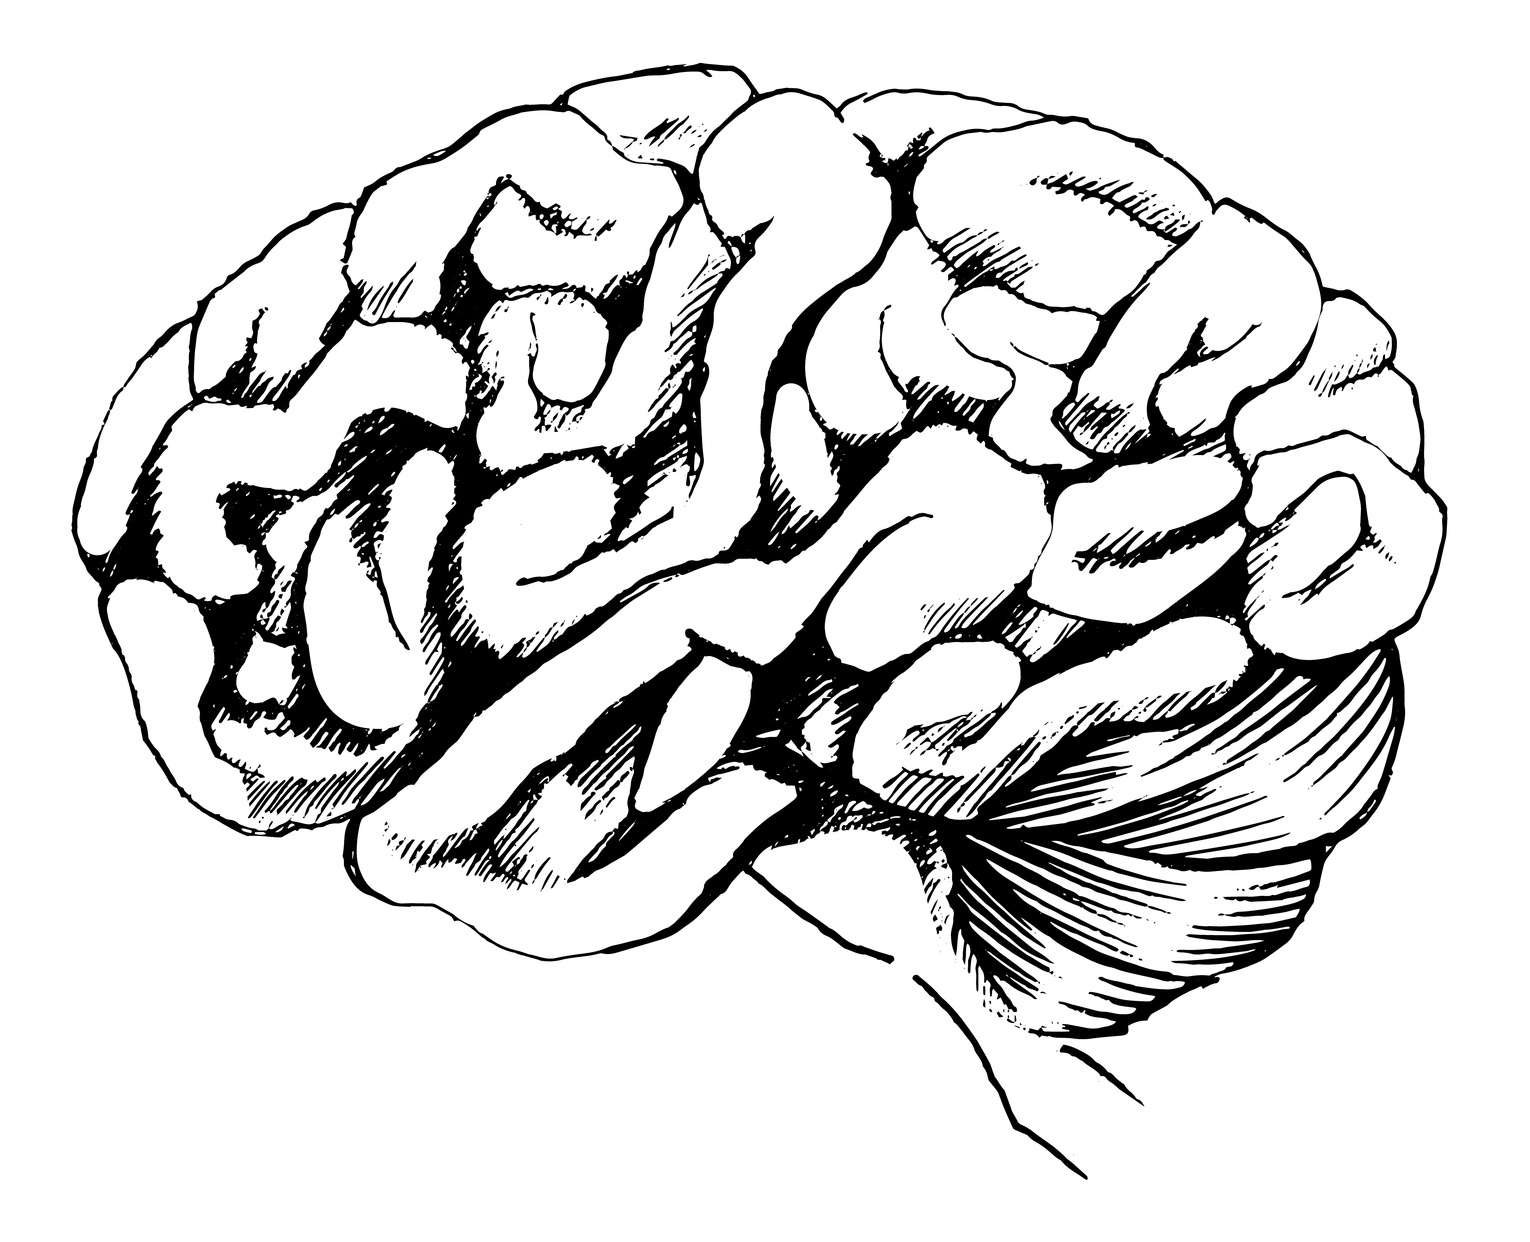 Контур мозга человека